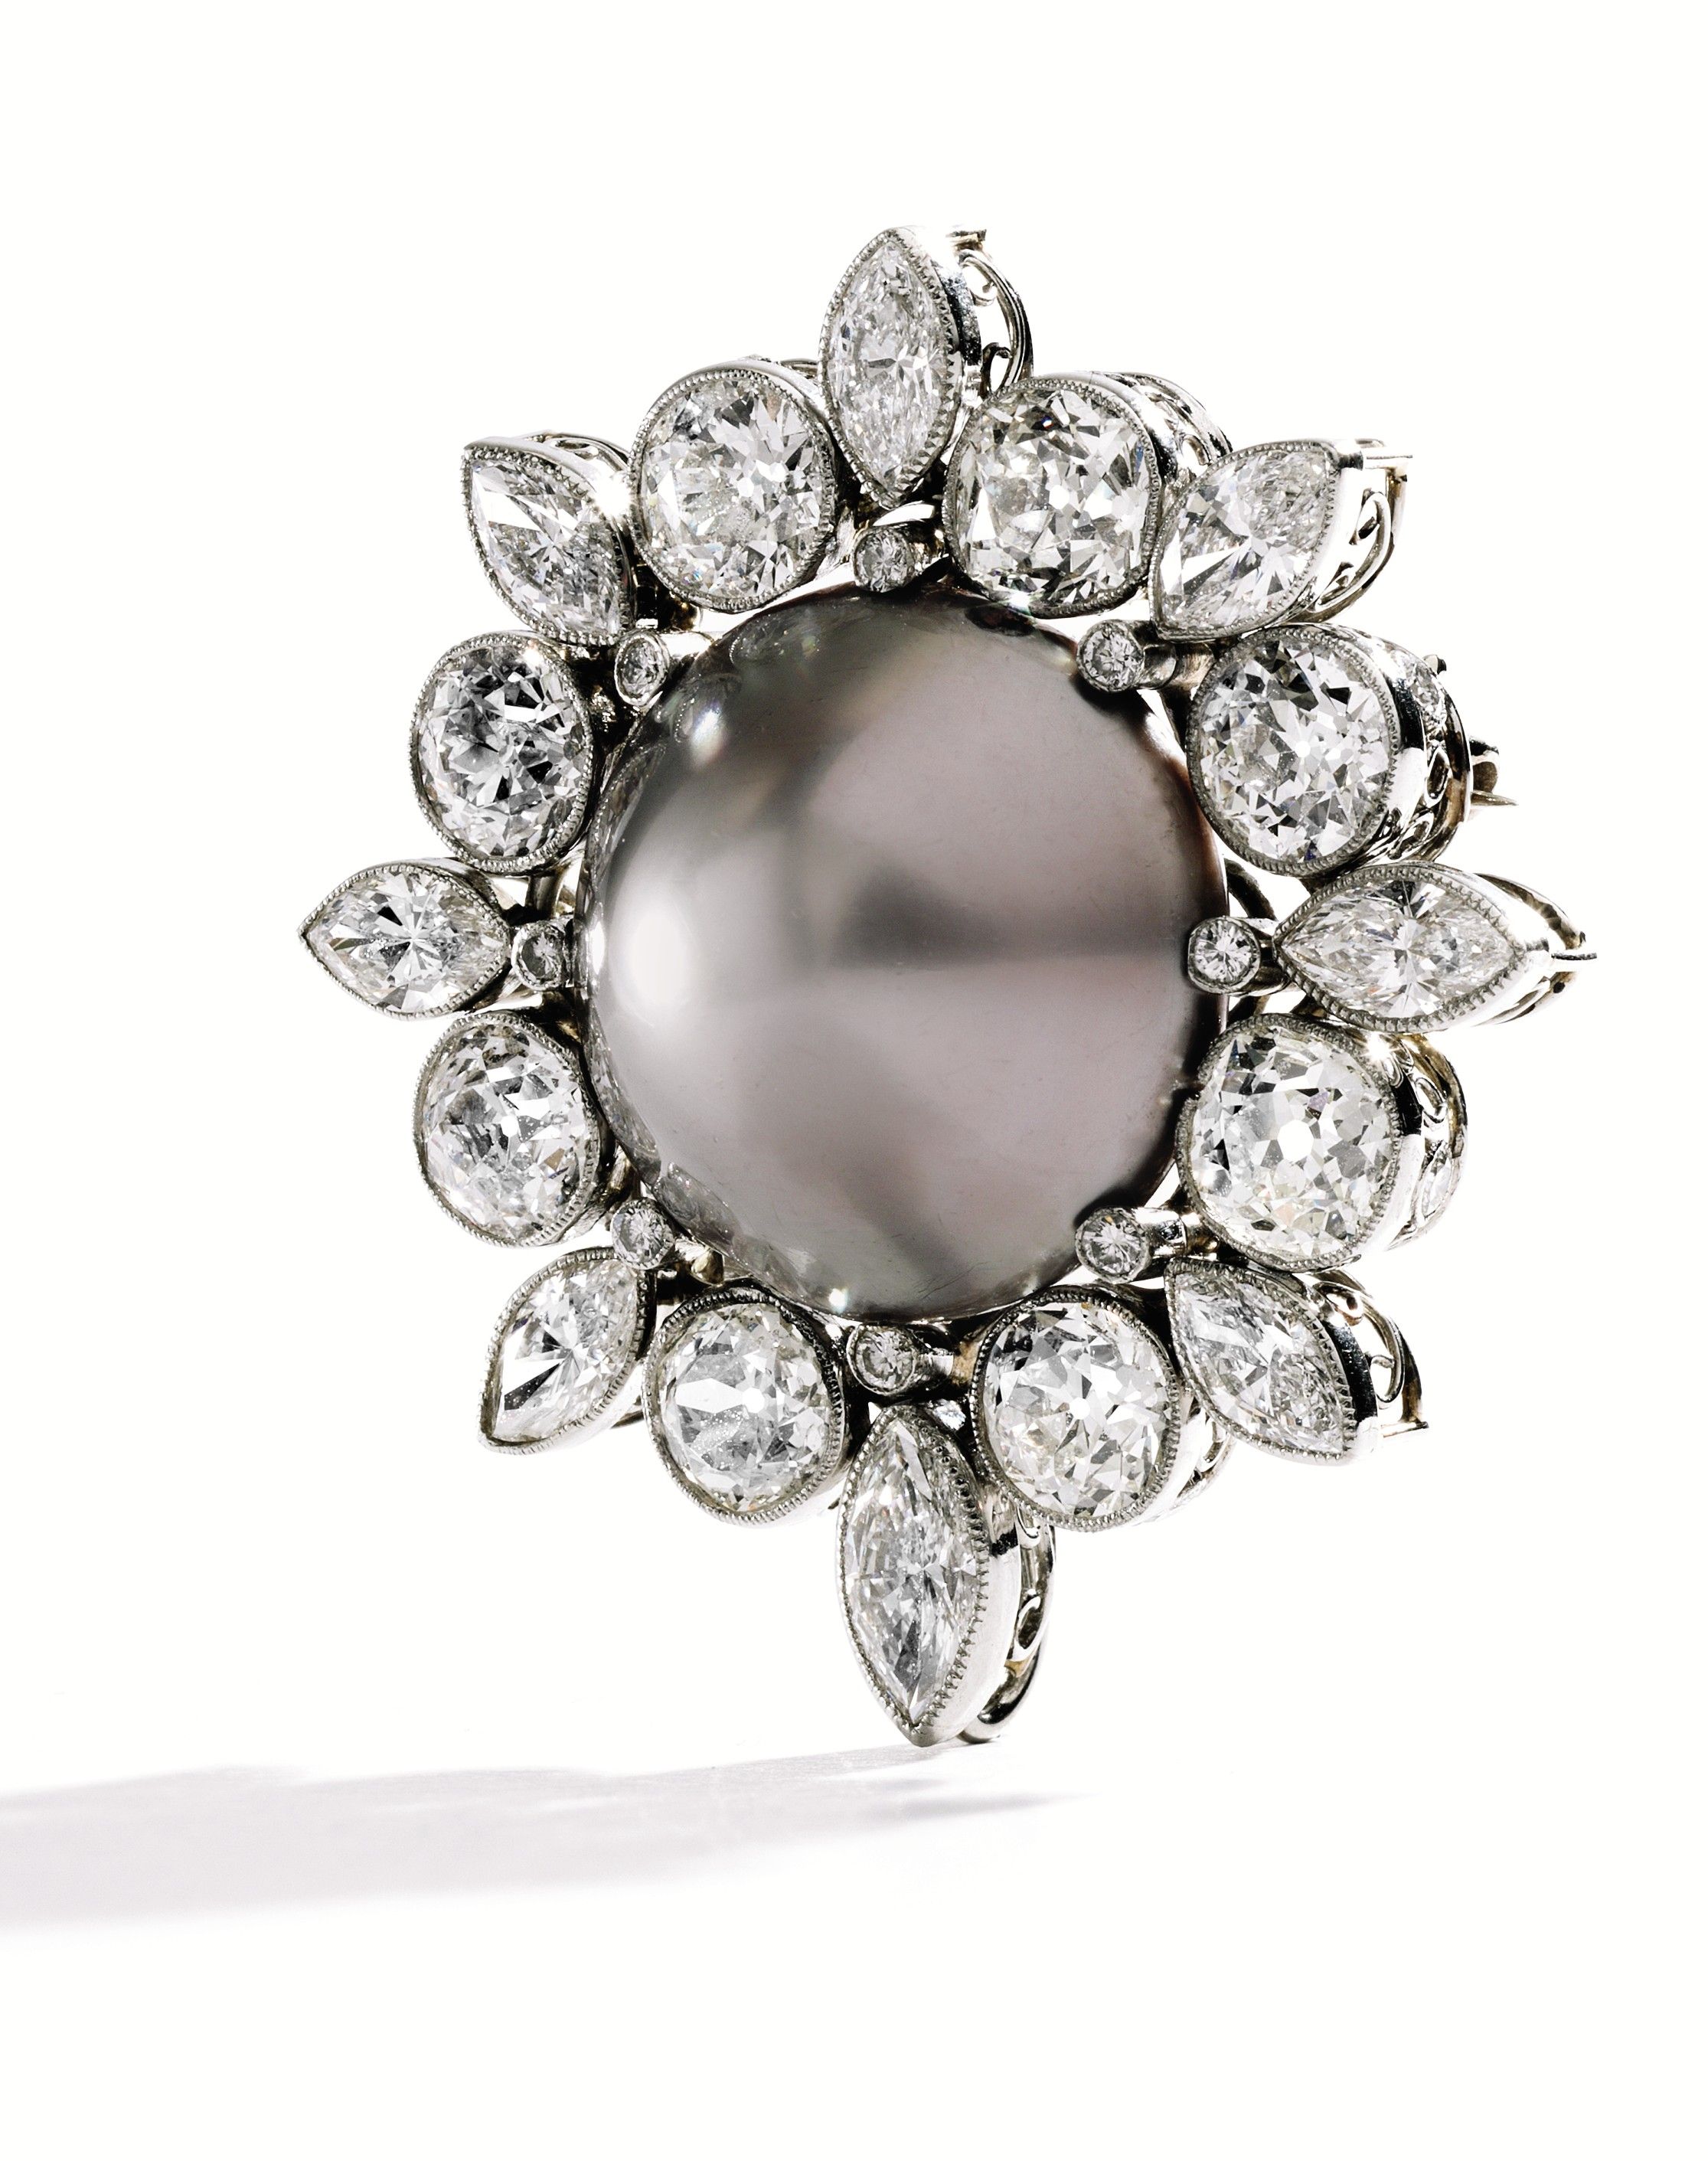 Diamond, natural pearl, brooch